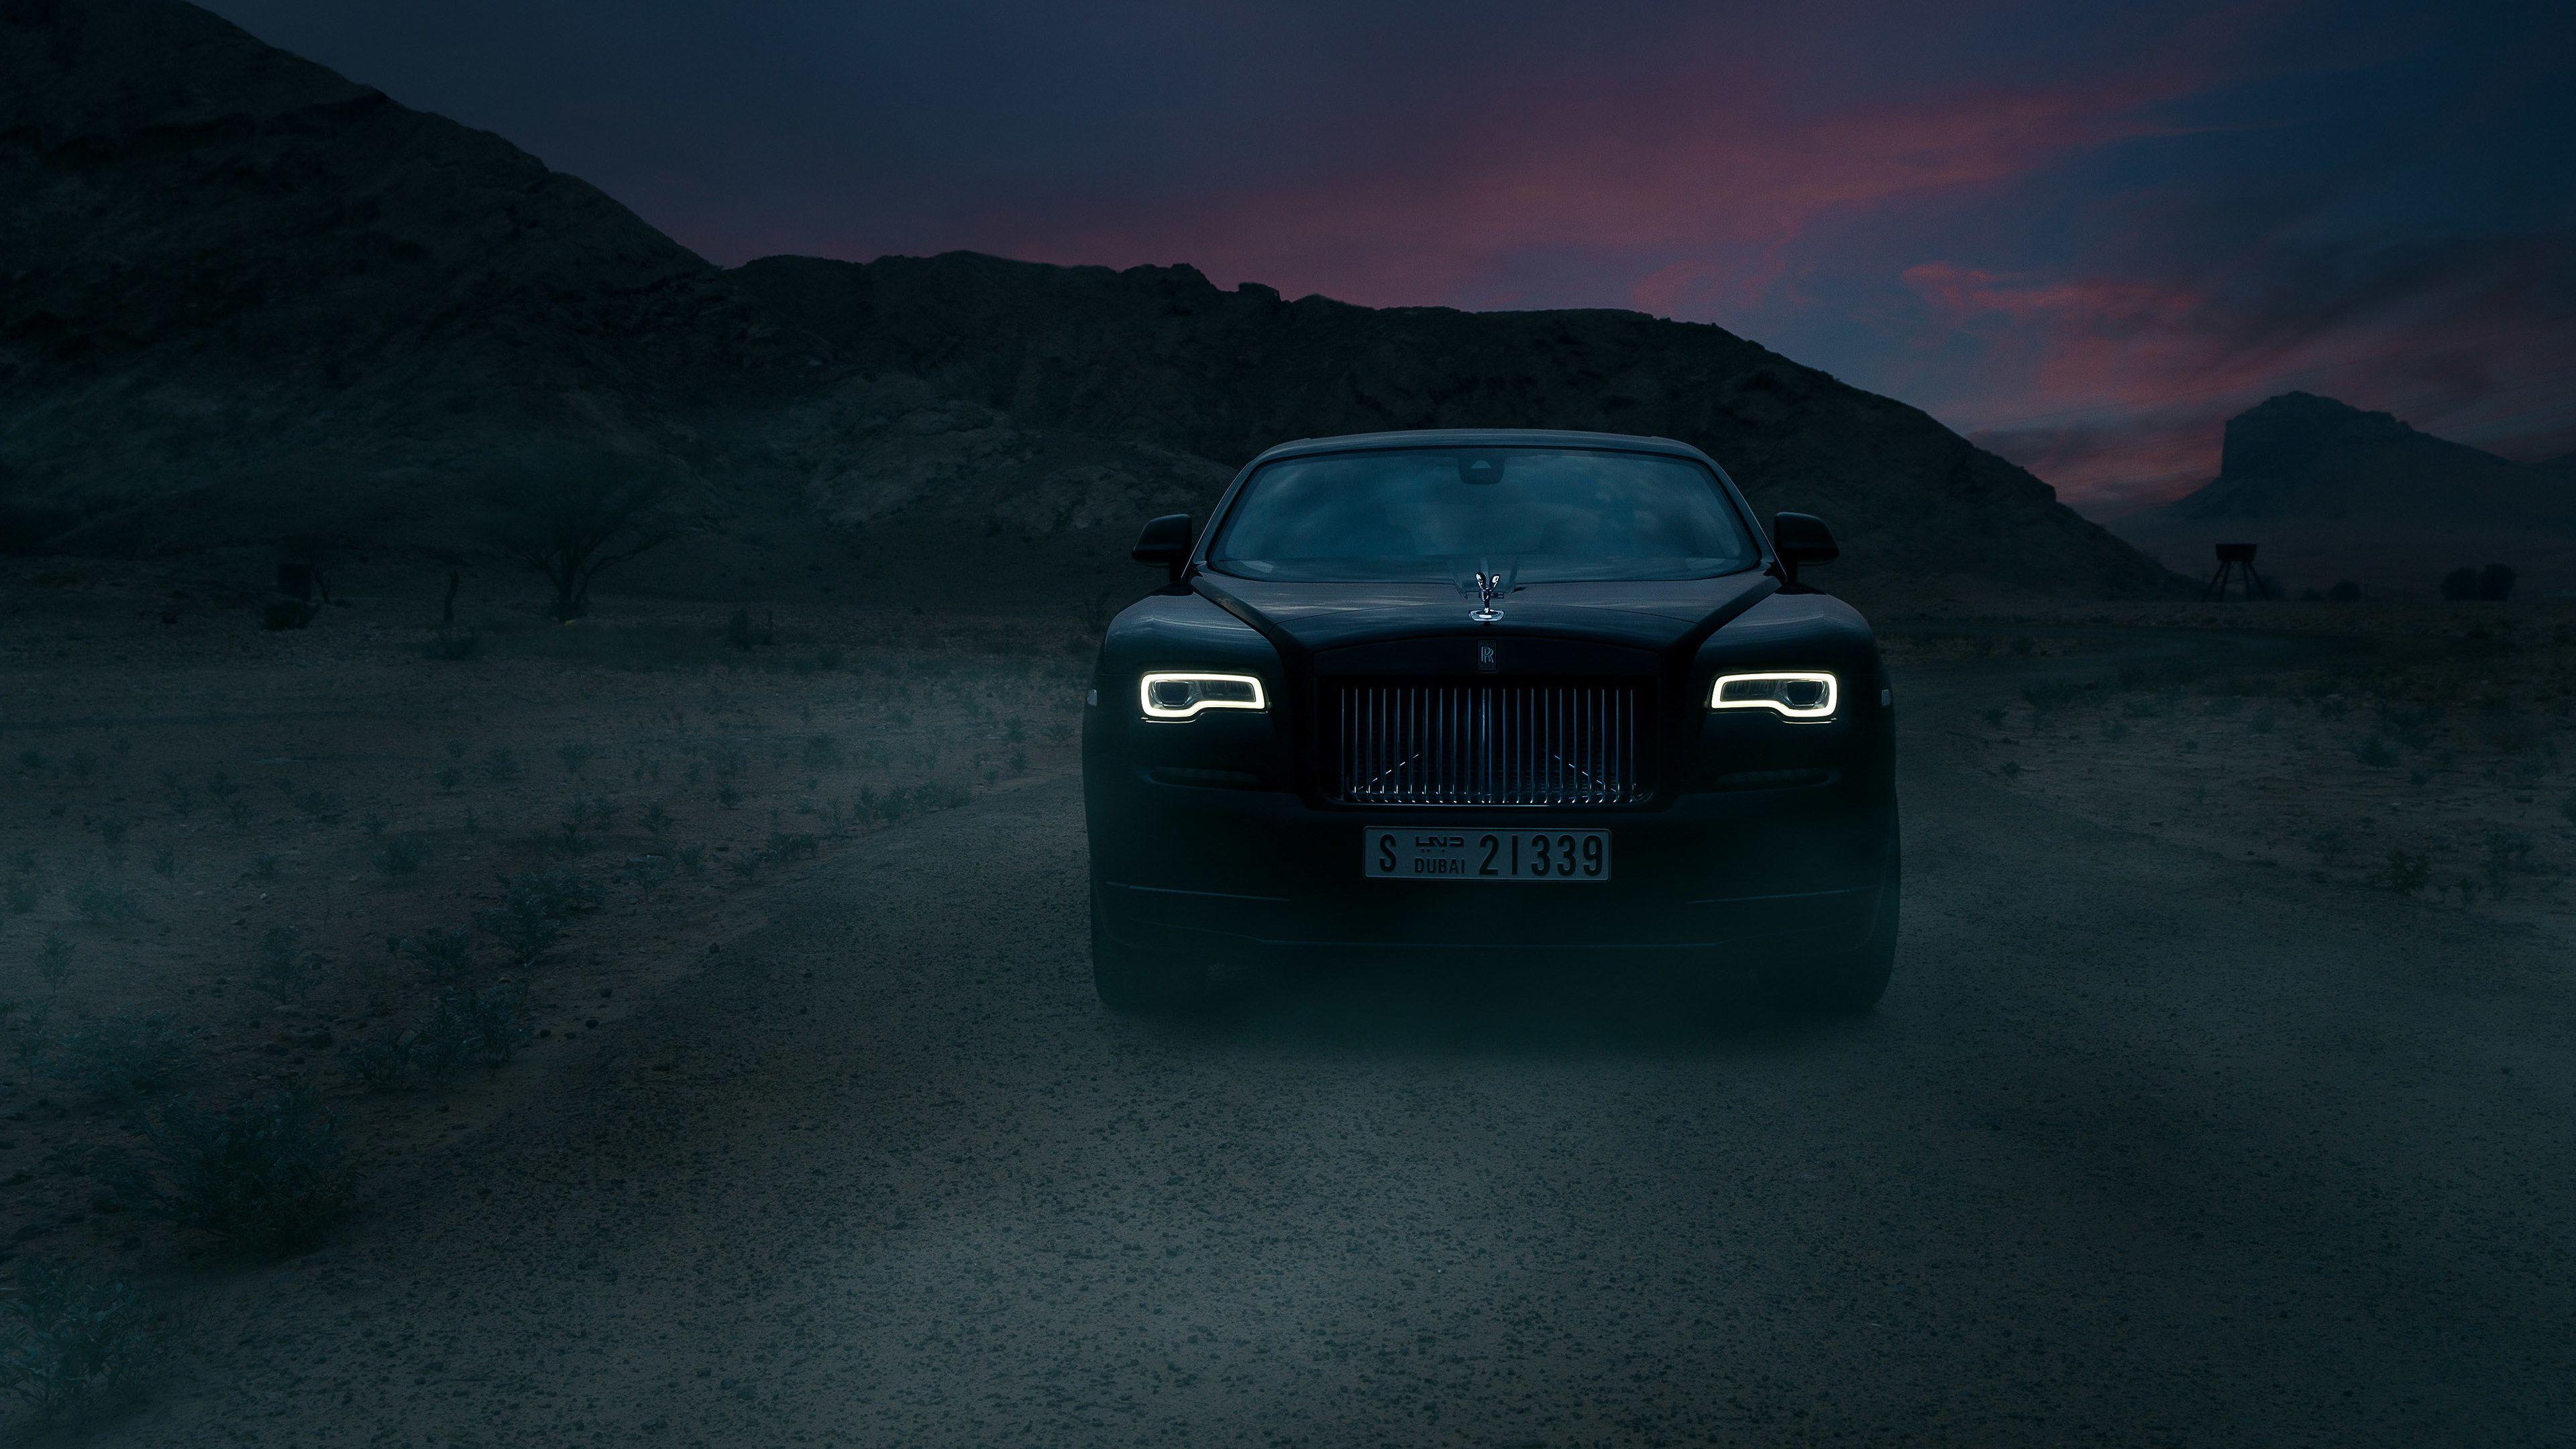 Rolls Royce Wraith Black Badge Rolls Royce Wraith Wallpaper, Rolls Royce Wallpaper, Hd Wallpa. Rolls Royce Wraith, Rolls Royce Wraith Black, Black Car Wallpaper